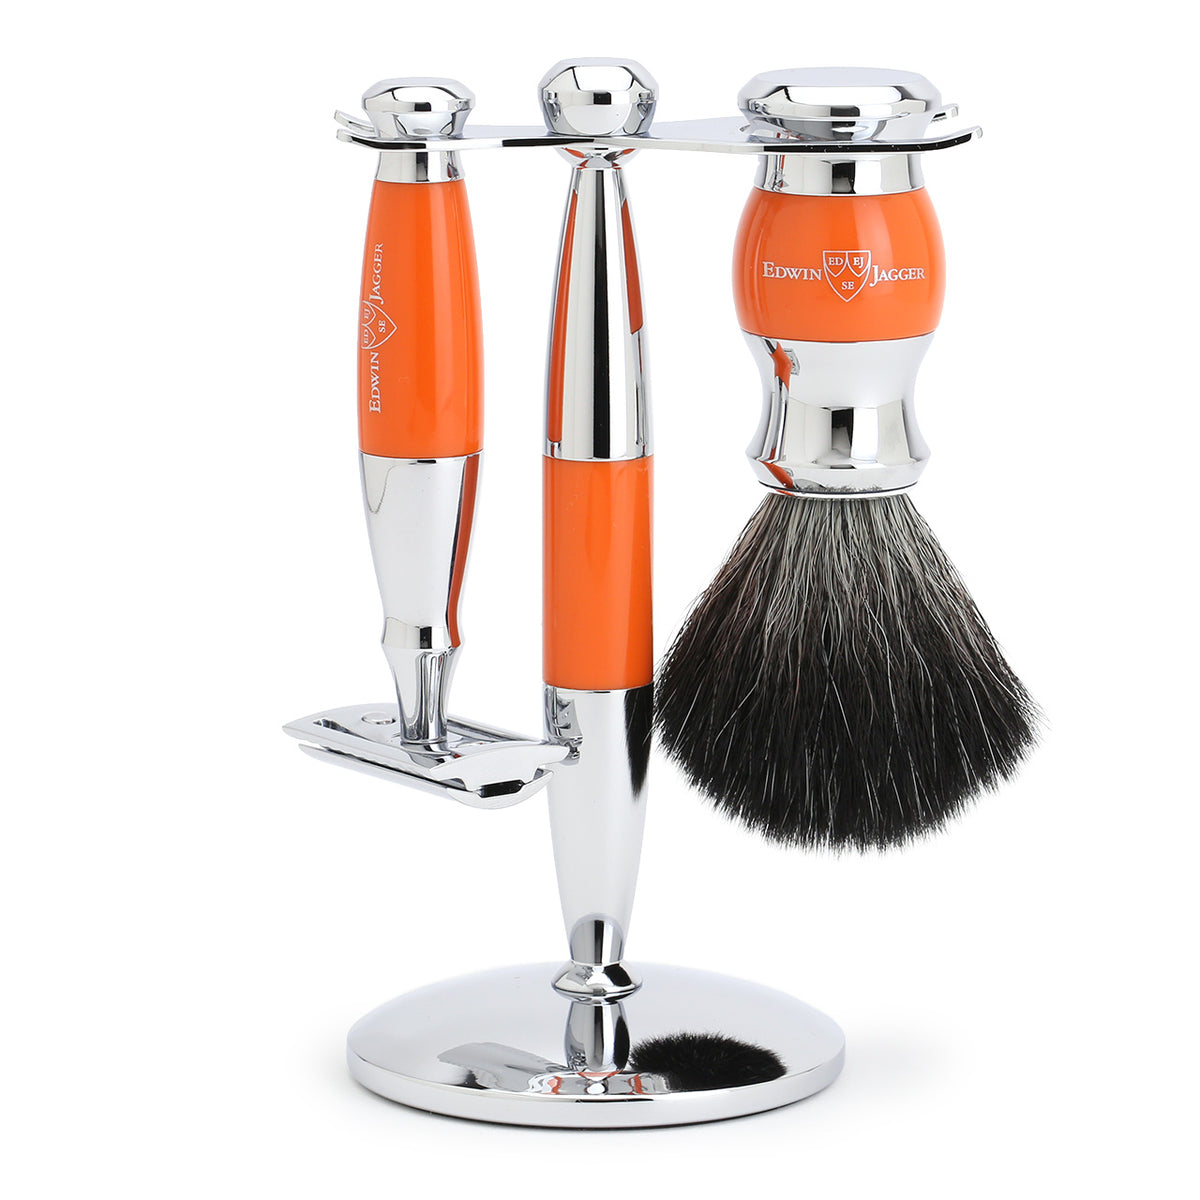 Edwin Jagger Orange 3 piece set - safety razor, shaving brush and stand